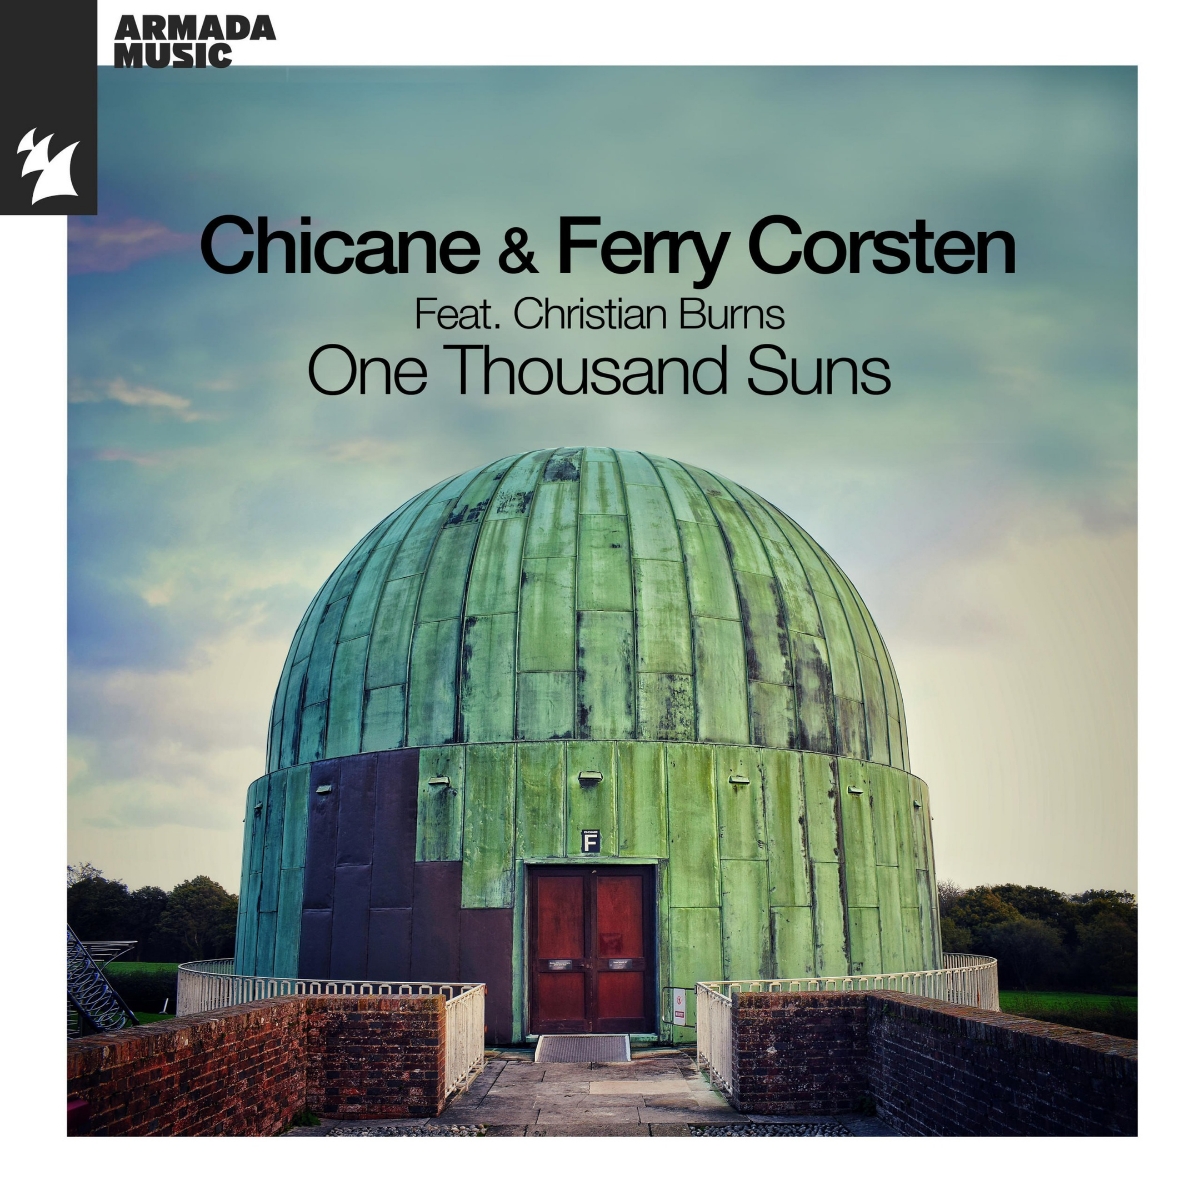 Chicane & Ferry Corsten feat. Christian Burns - One Thousand